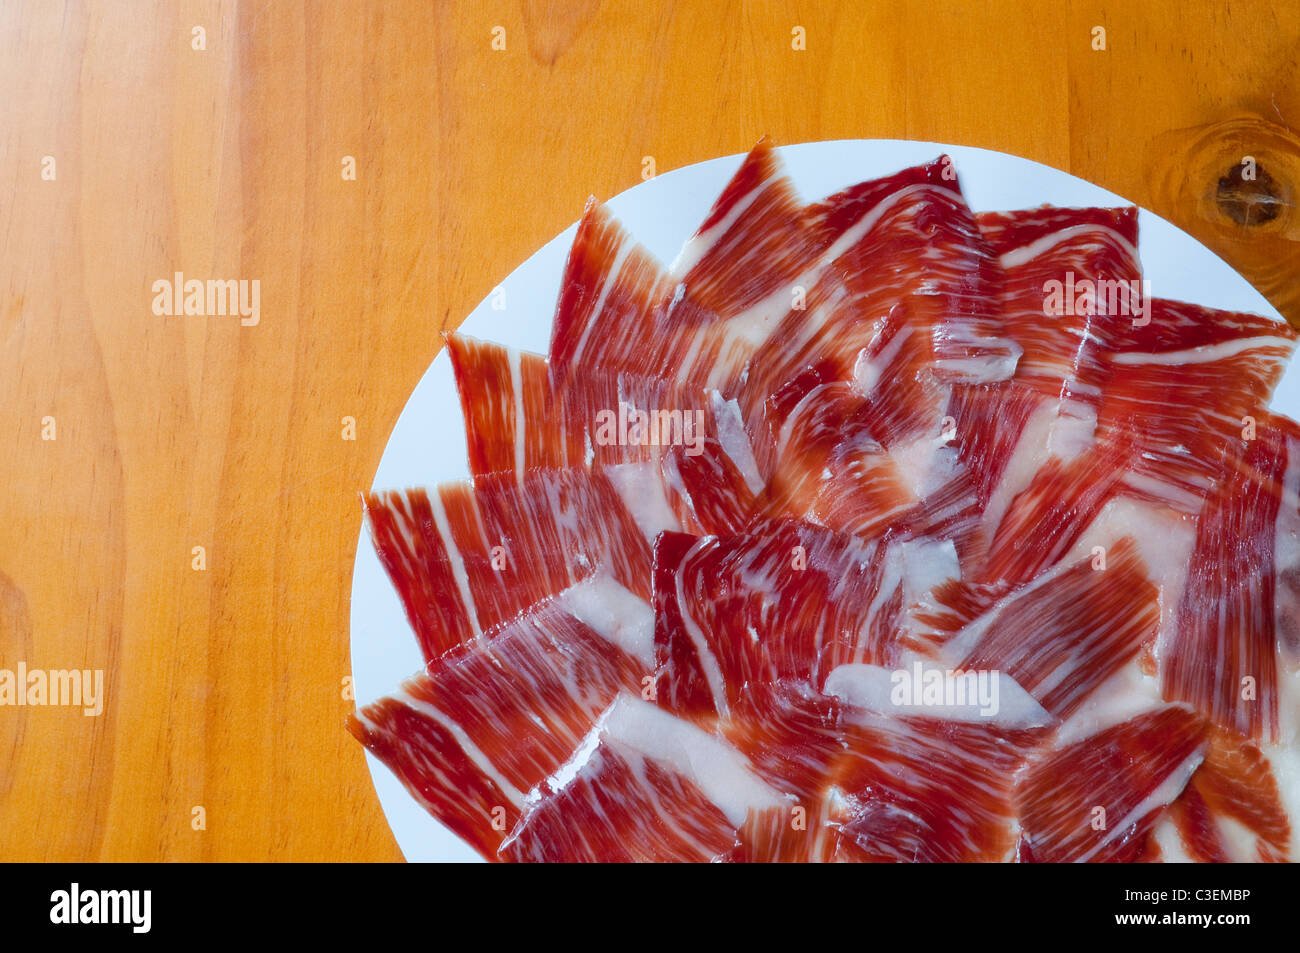 Iberian ham serving. Spain. Stock Photo